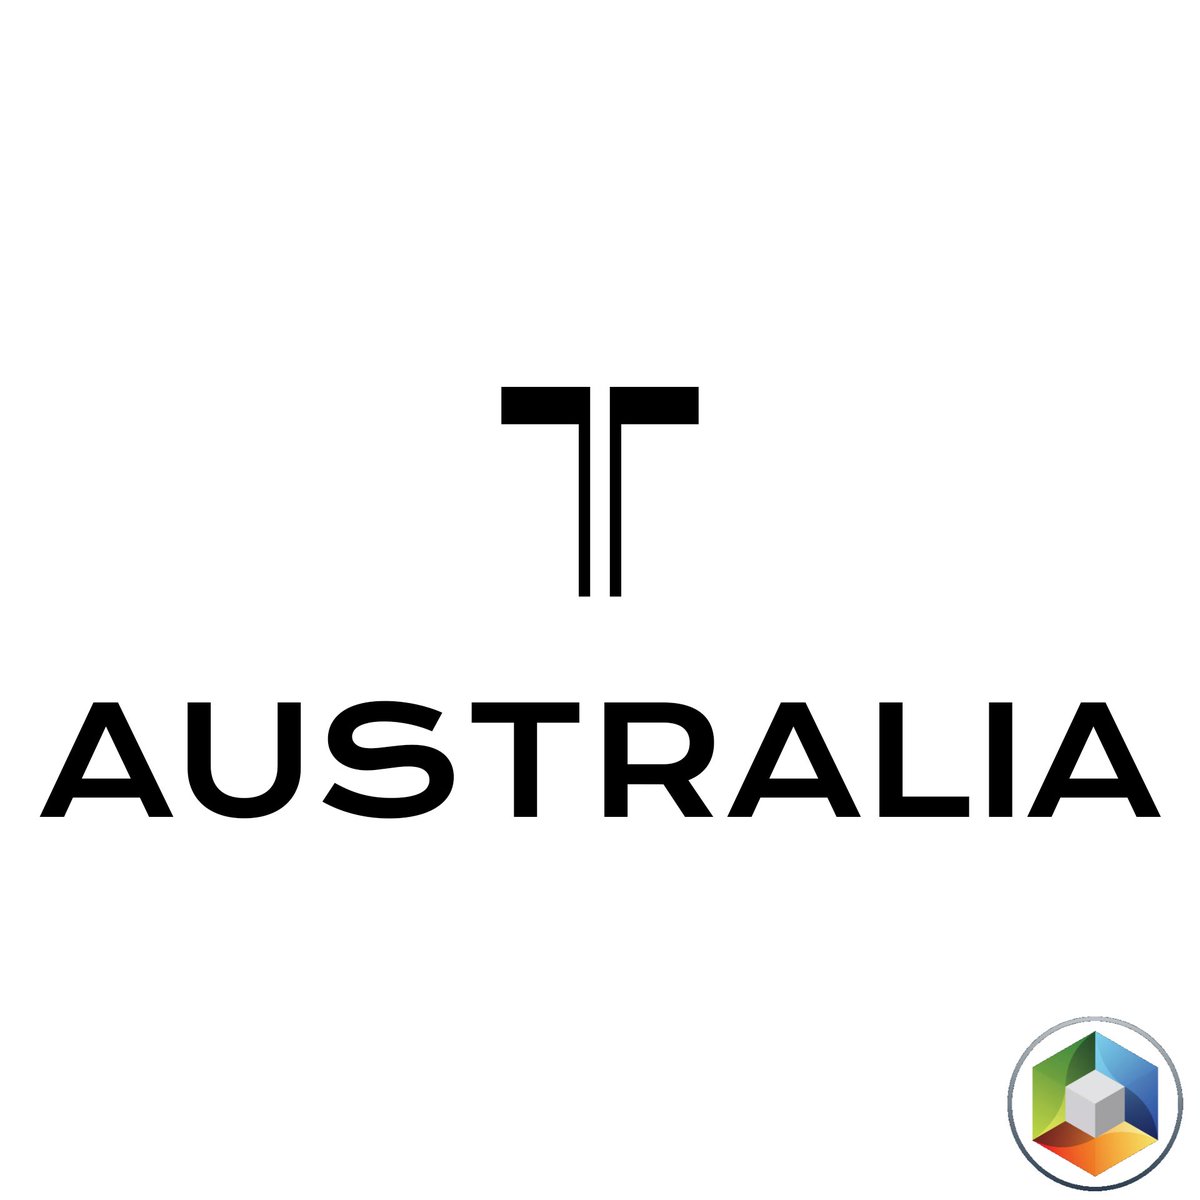 Australia Design Art.

#logo #logos #logodesign #logomaker #DESIGNART #design #designinspiration #Font #Designship2024 #designthinking #design #designjobs #DesignGrowth #designtwitter #logodesigner